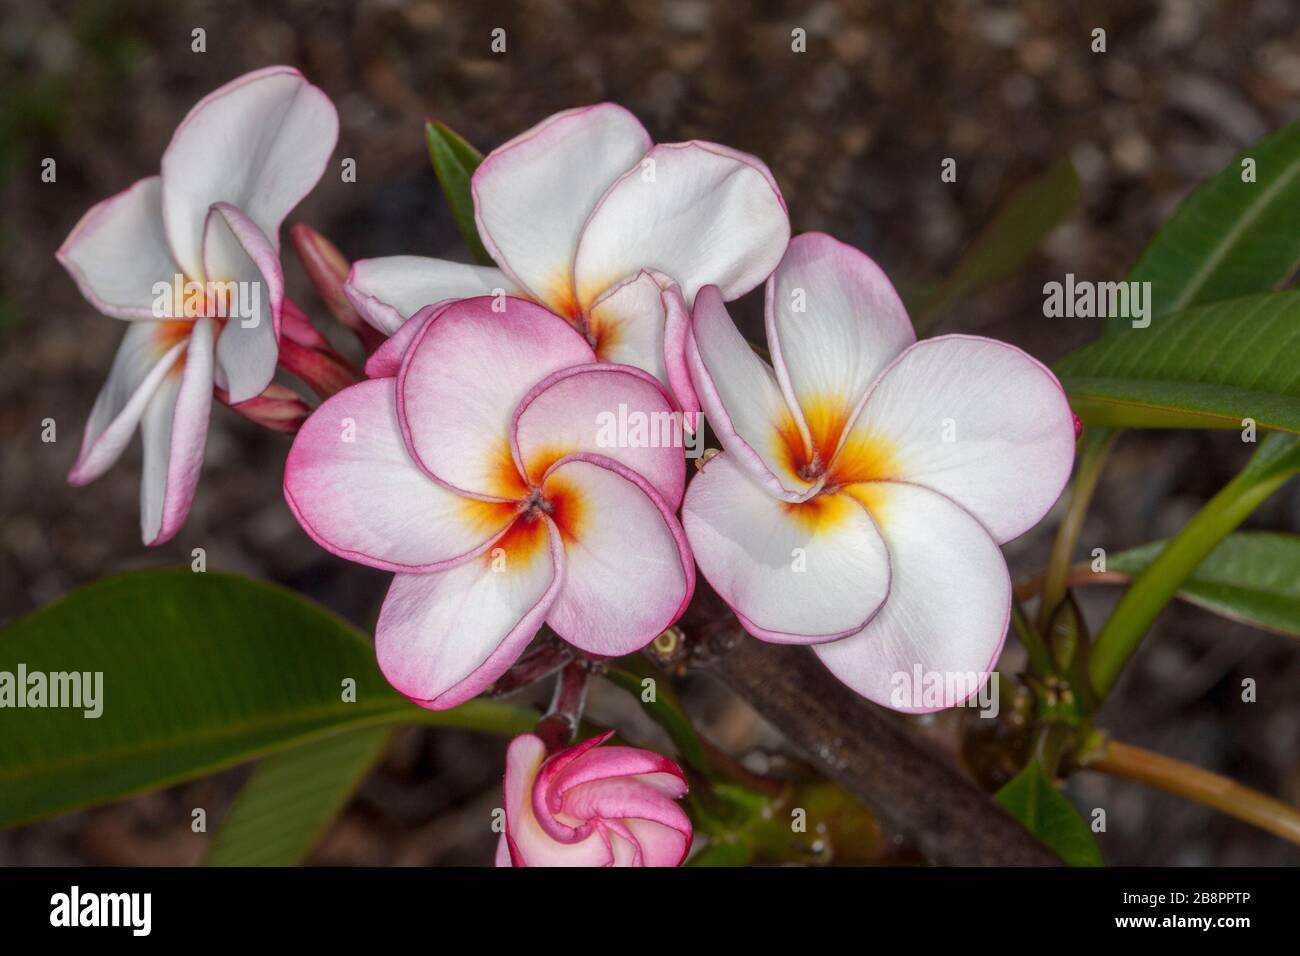 Cluster of beautiful pale pink and white perfumed flowers of Plumeria rubra 'Tornado',  frangipani flowers on dark background Stock Photo